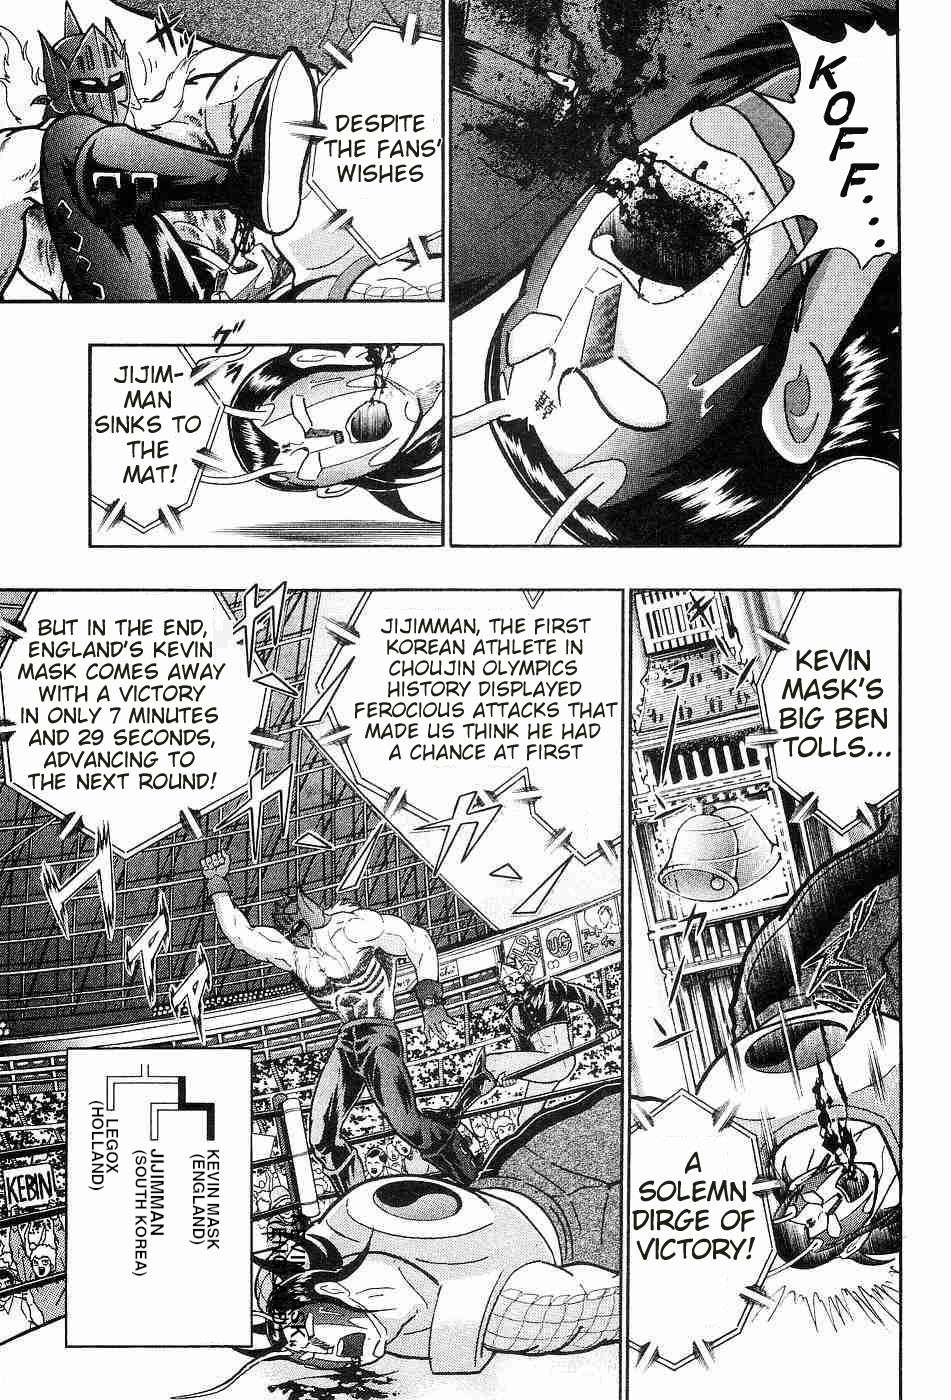 Kinnikuman II Sei - 2nd Generation - chapter 154 - #2